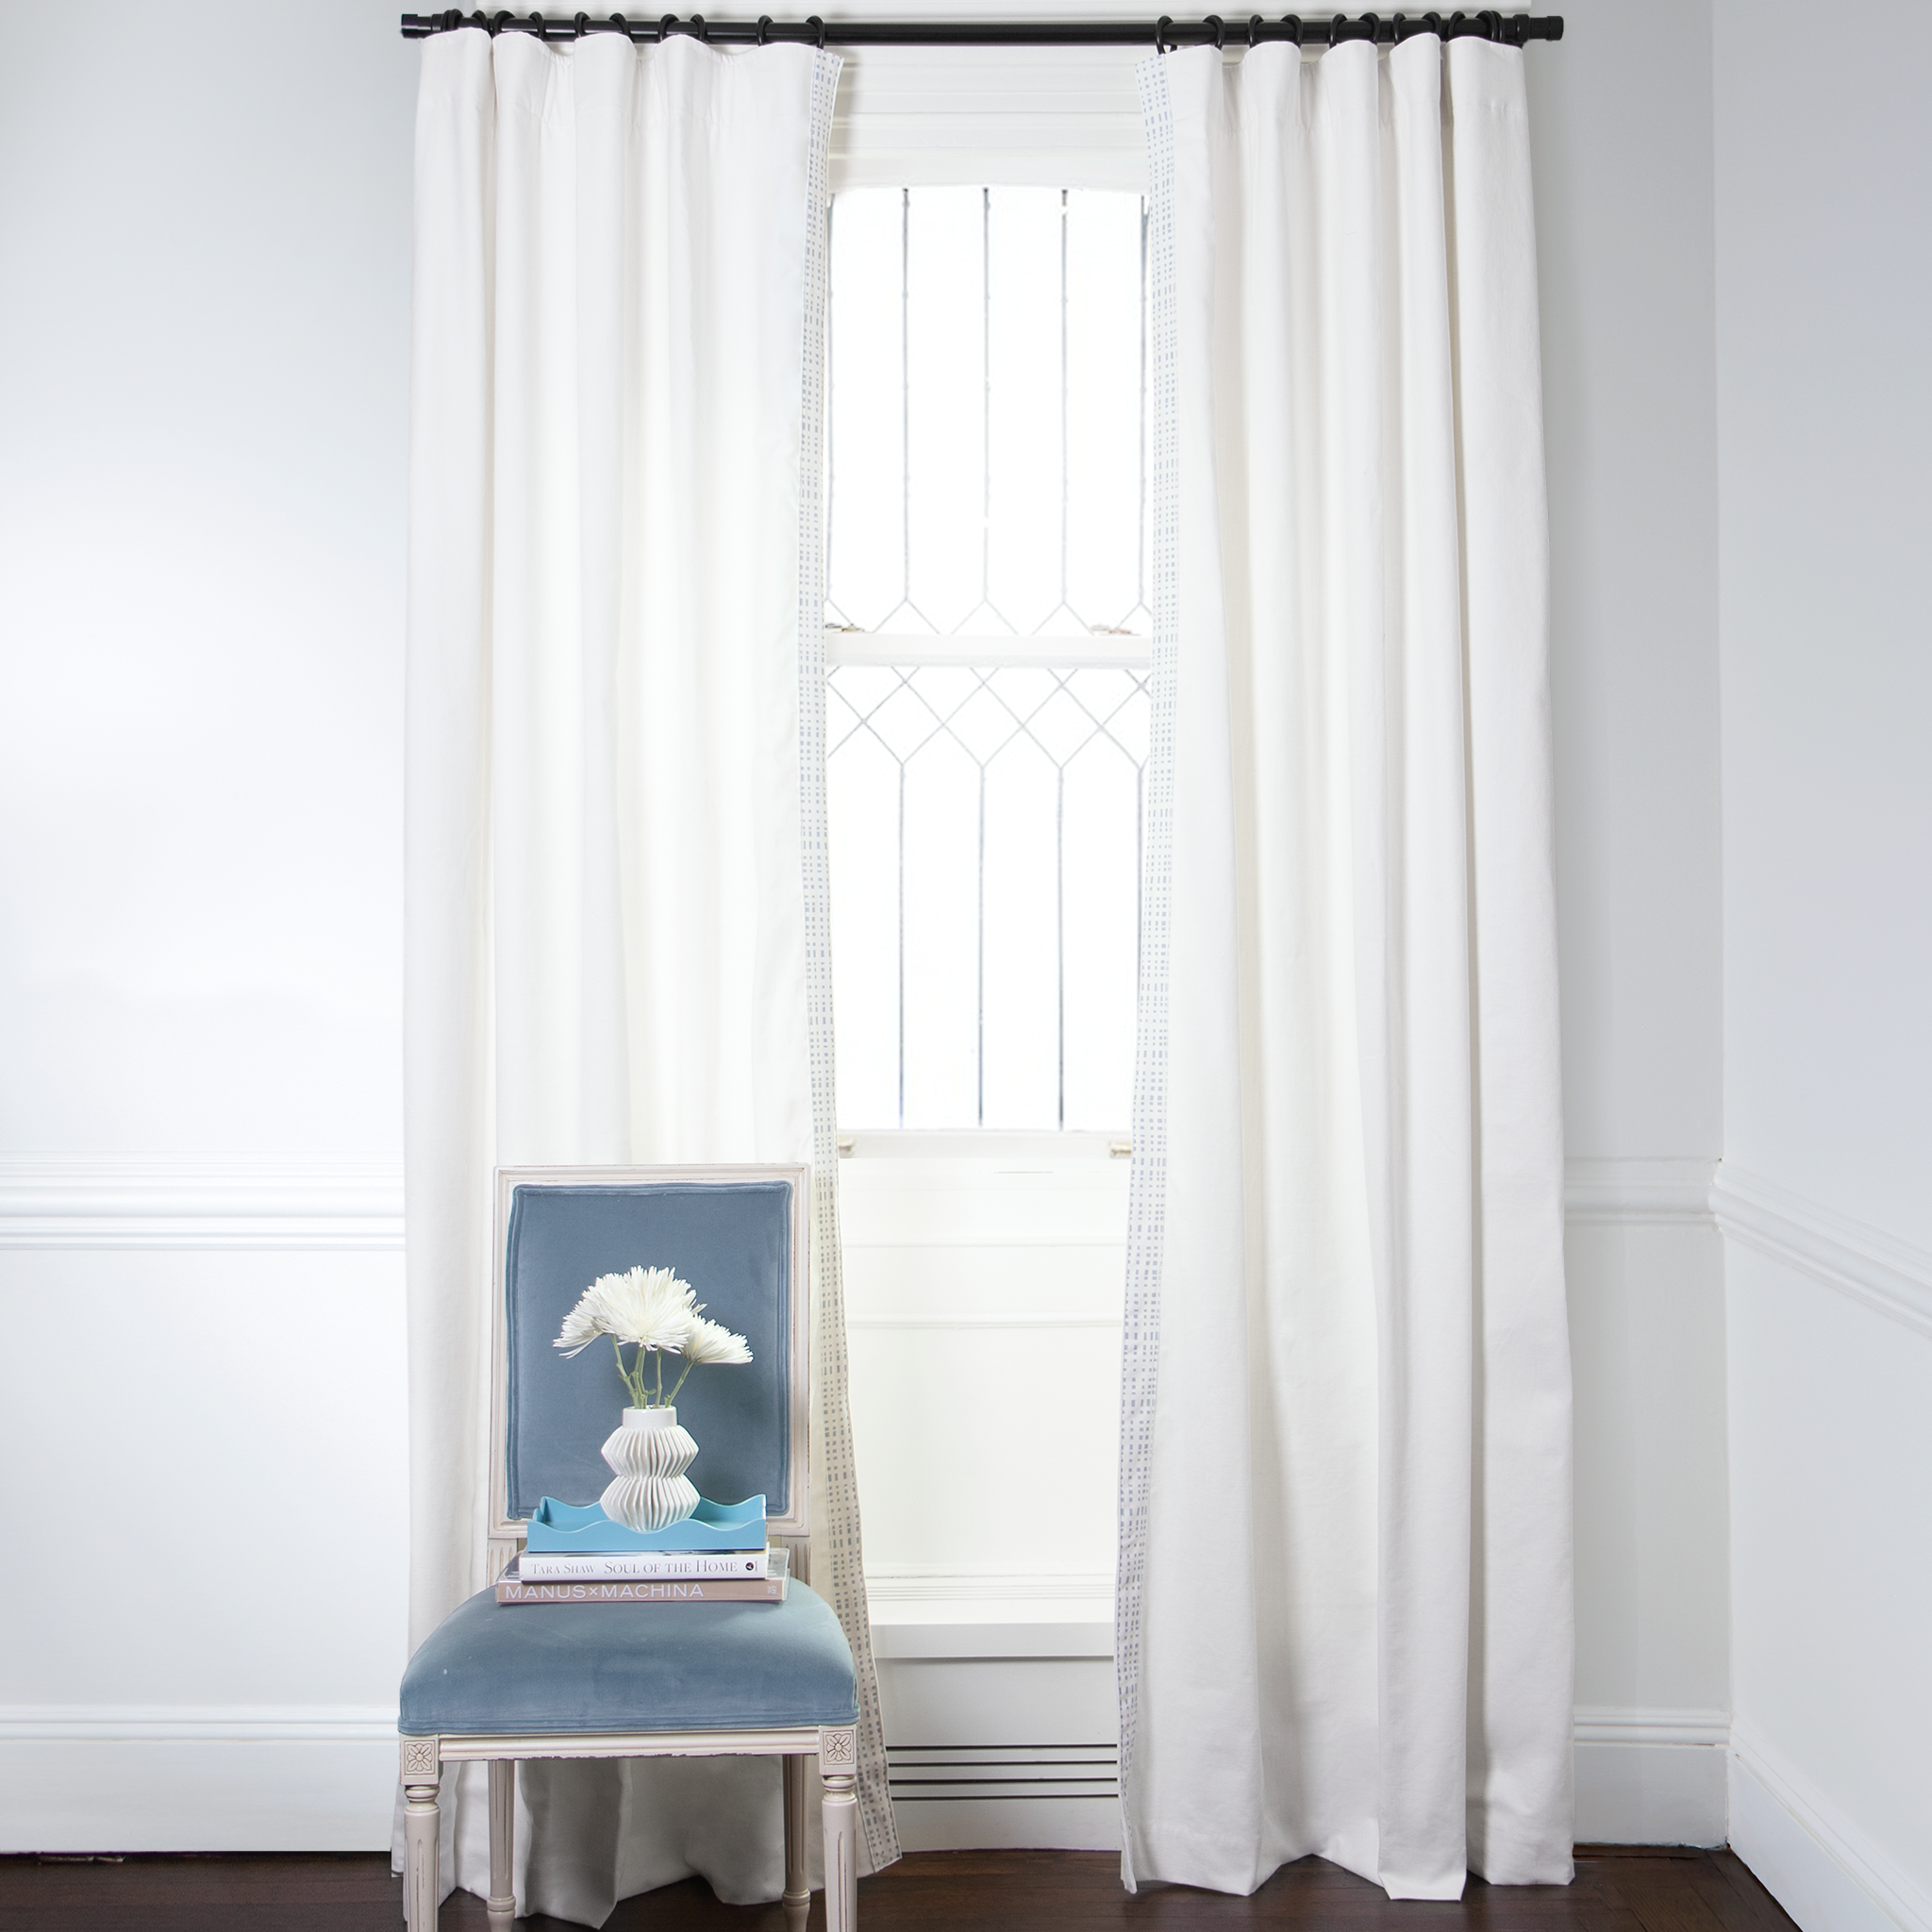 Snow Curtain - Pinch Pleat, 25"W x 102"L, Privacy Lining, No Trim